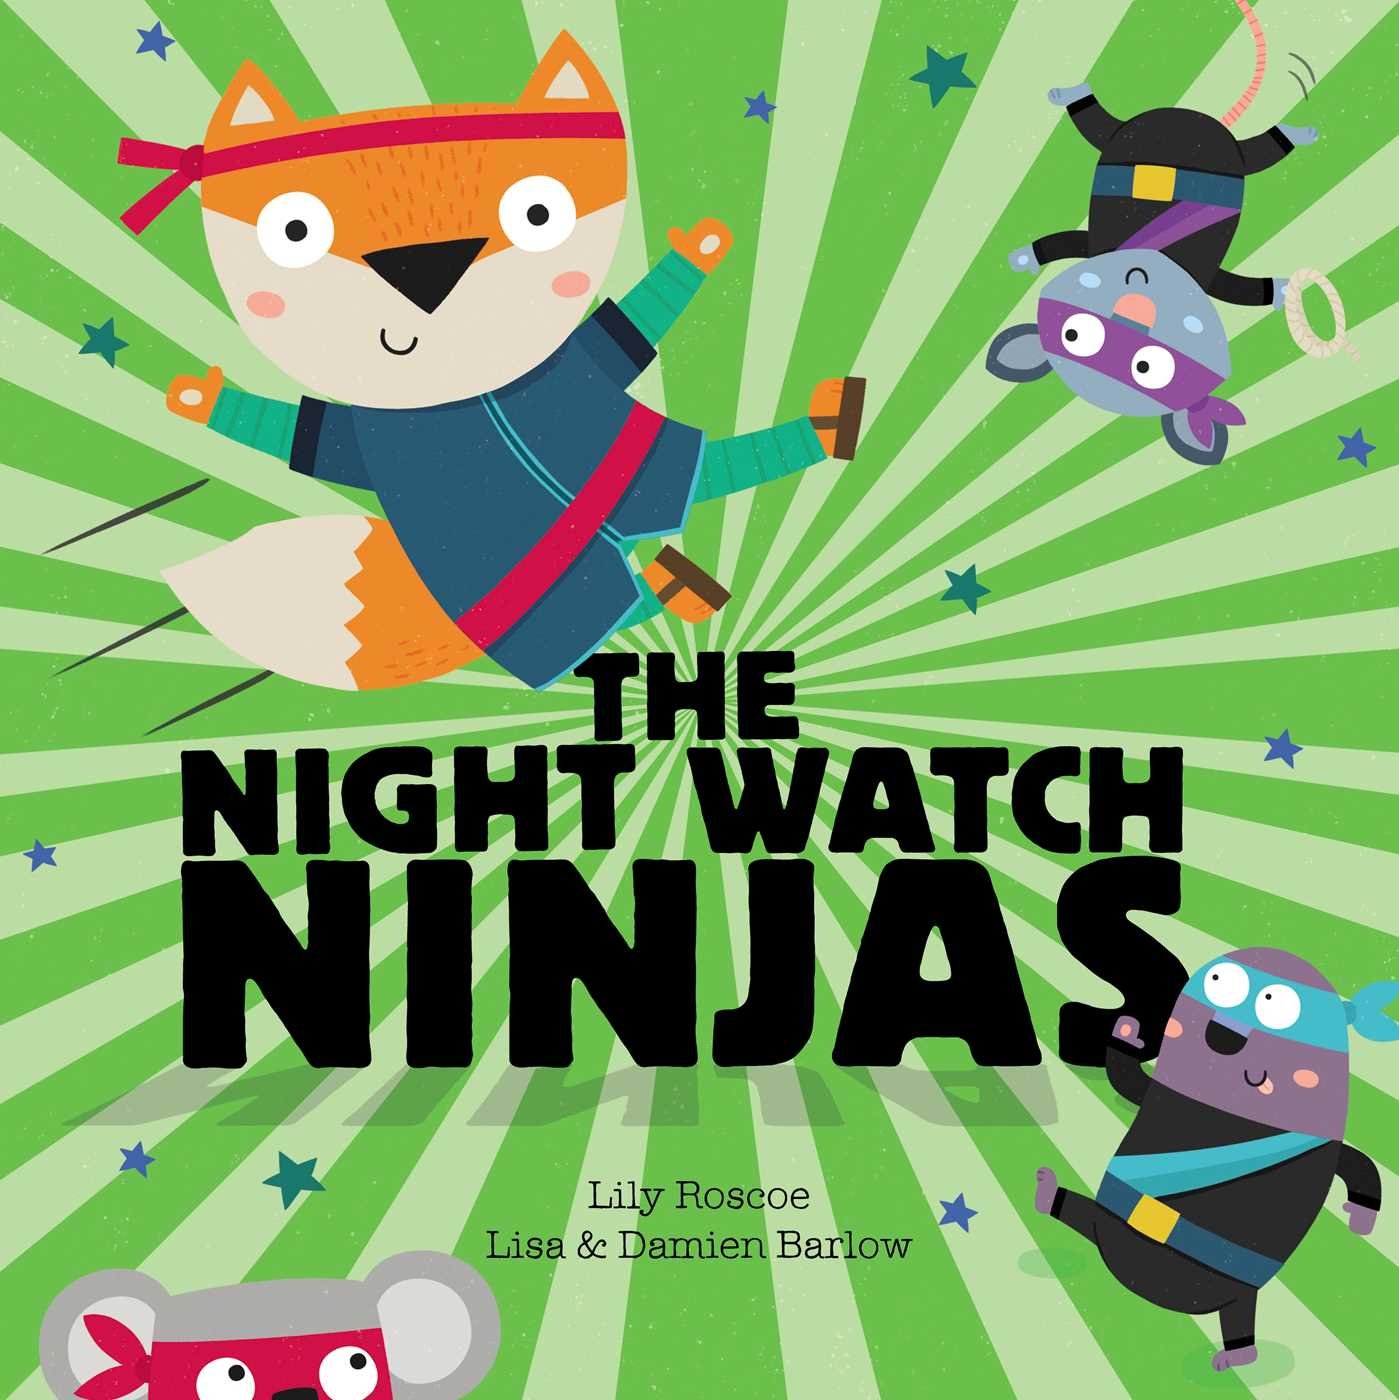 The Night Watch Ninjas